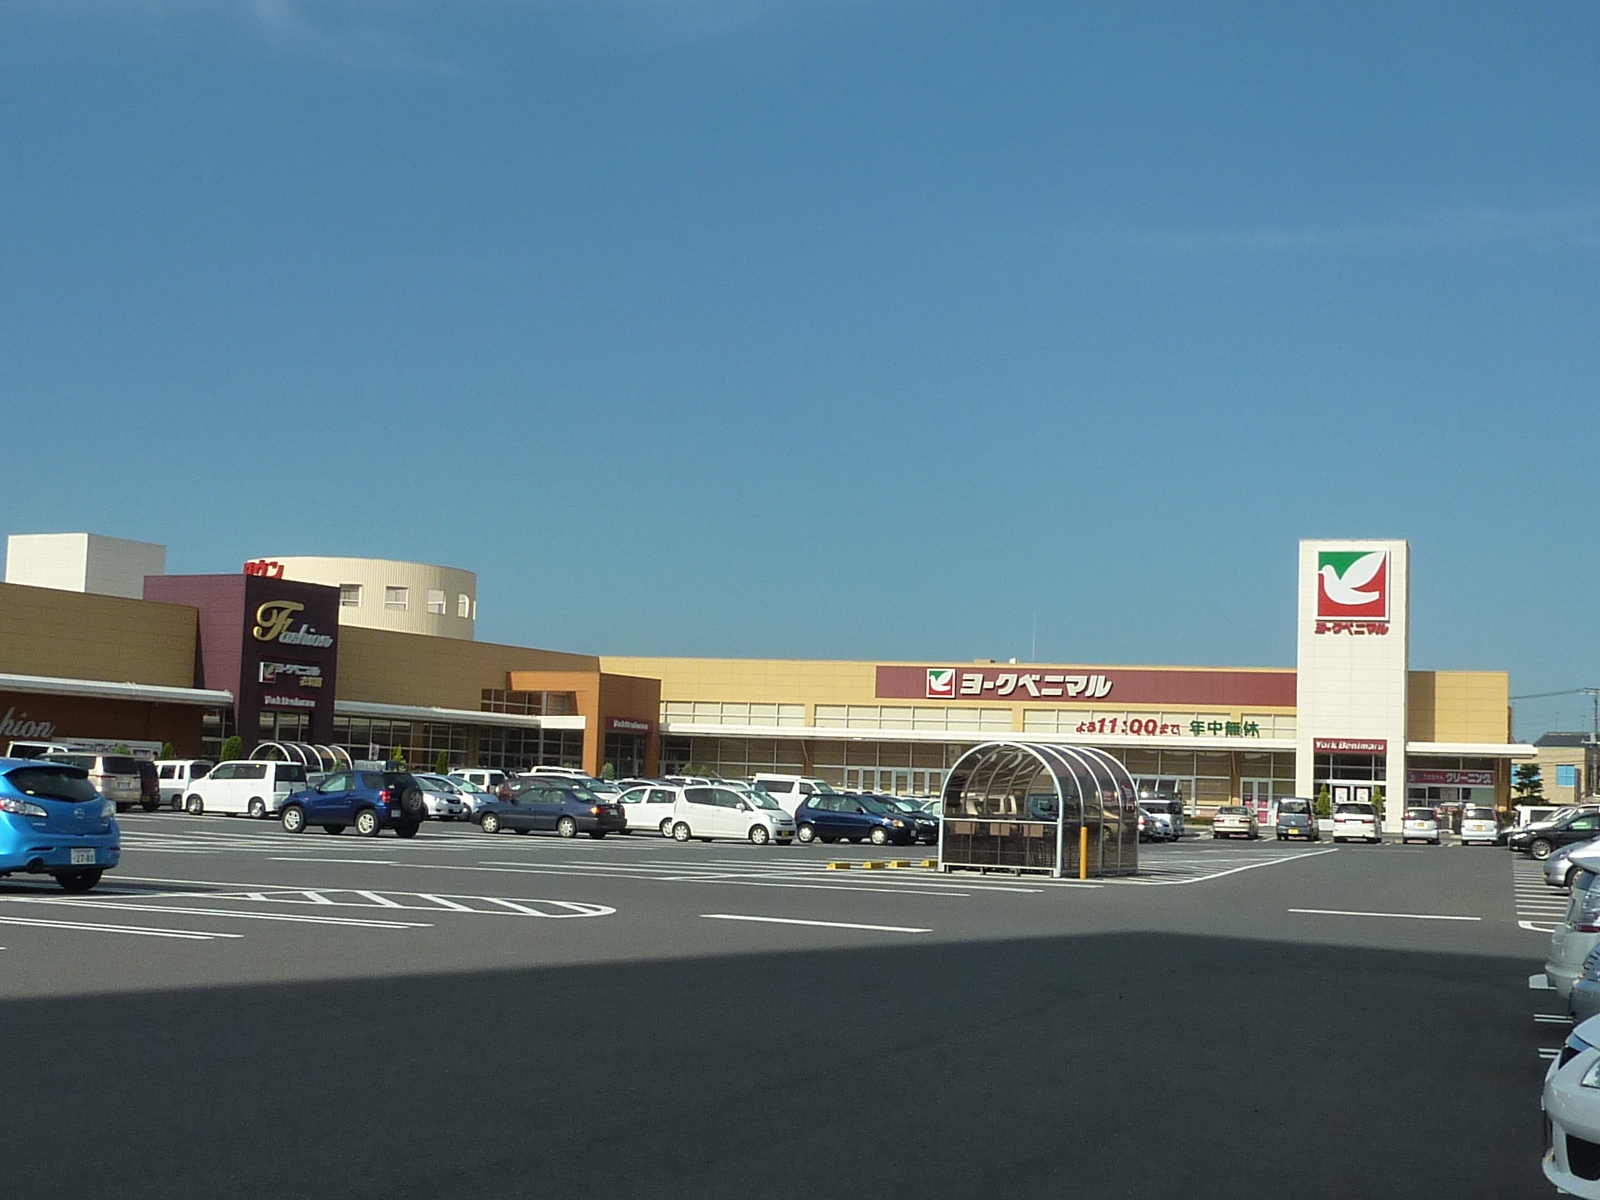 Shopping centre. 1051m to Yorktown Akatsuka (shopping center)